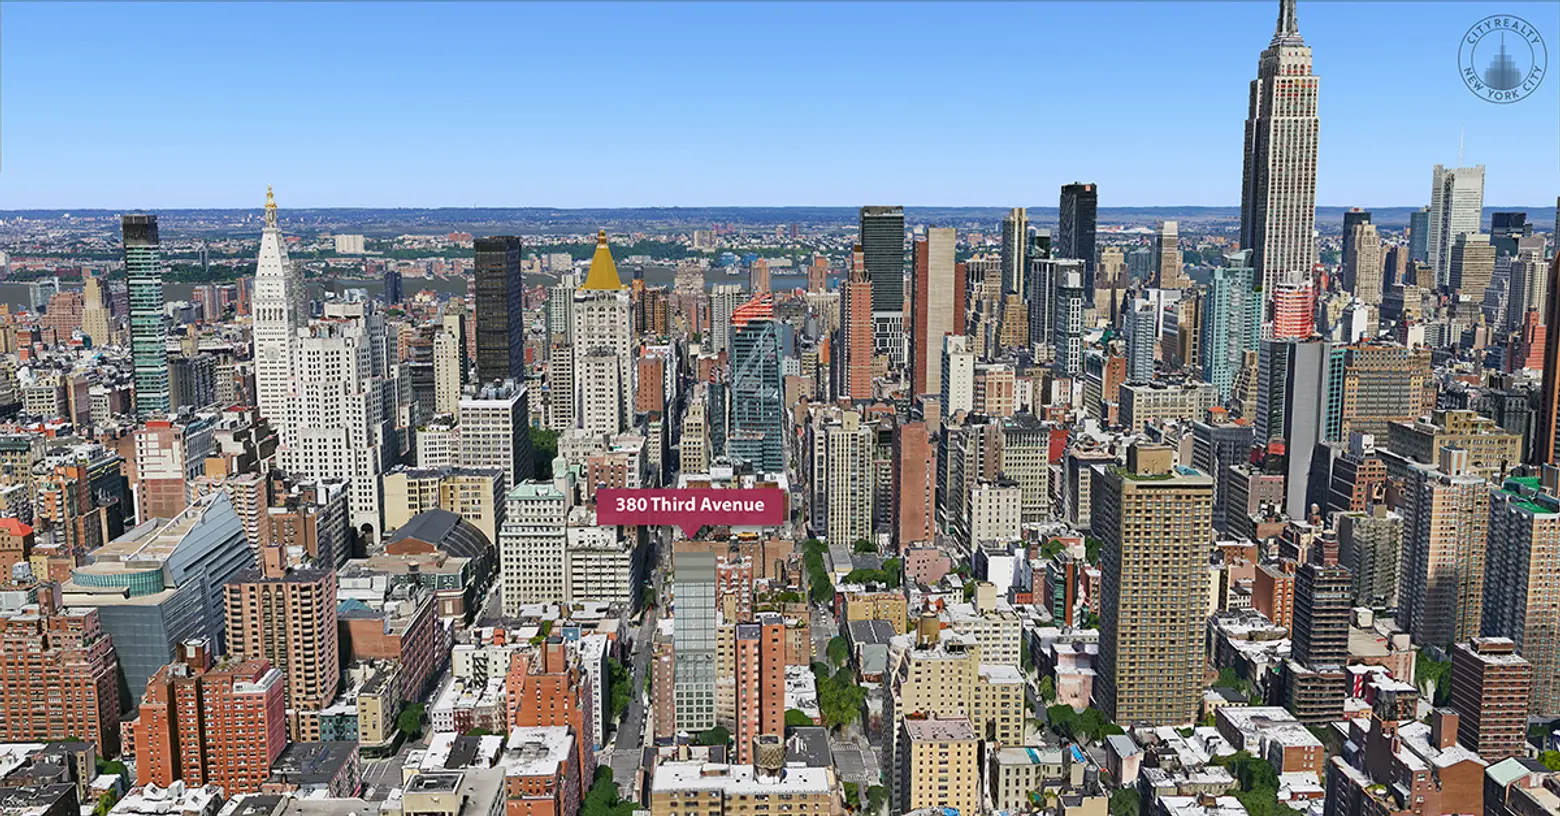 Google Earth, CityRealty 380 Third Avenue, Isaac Stern Architcts, Kips Bay, Manhattan Developments, NYC Real Estate (3)